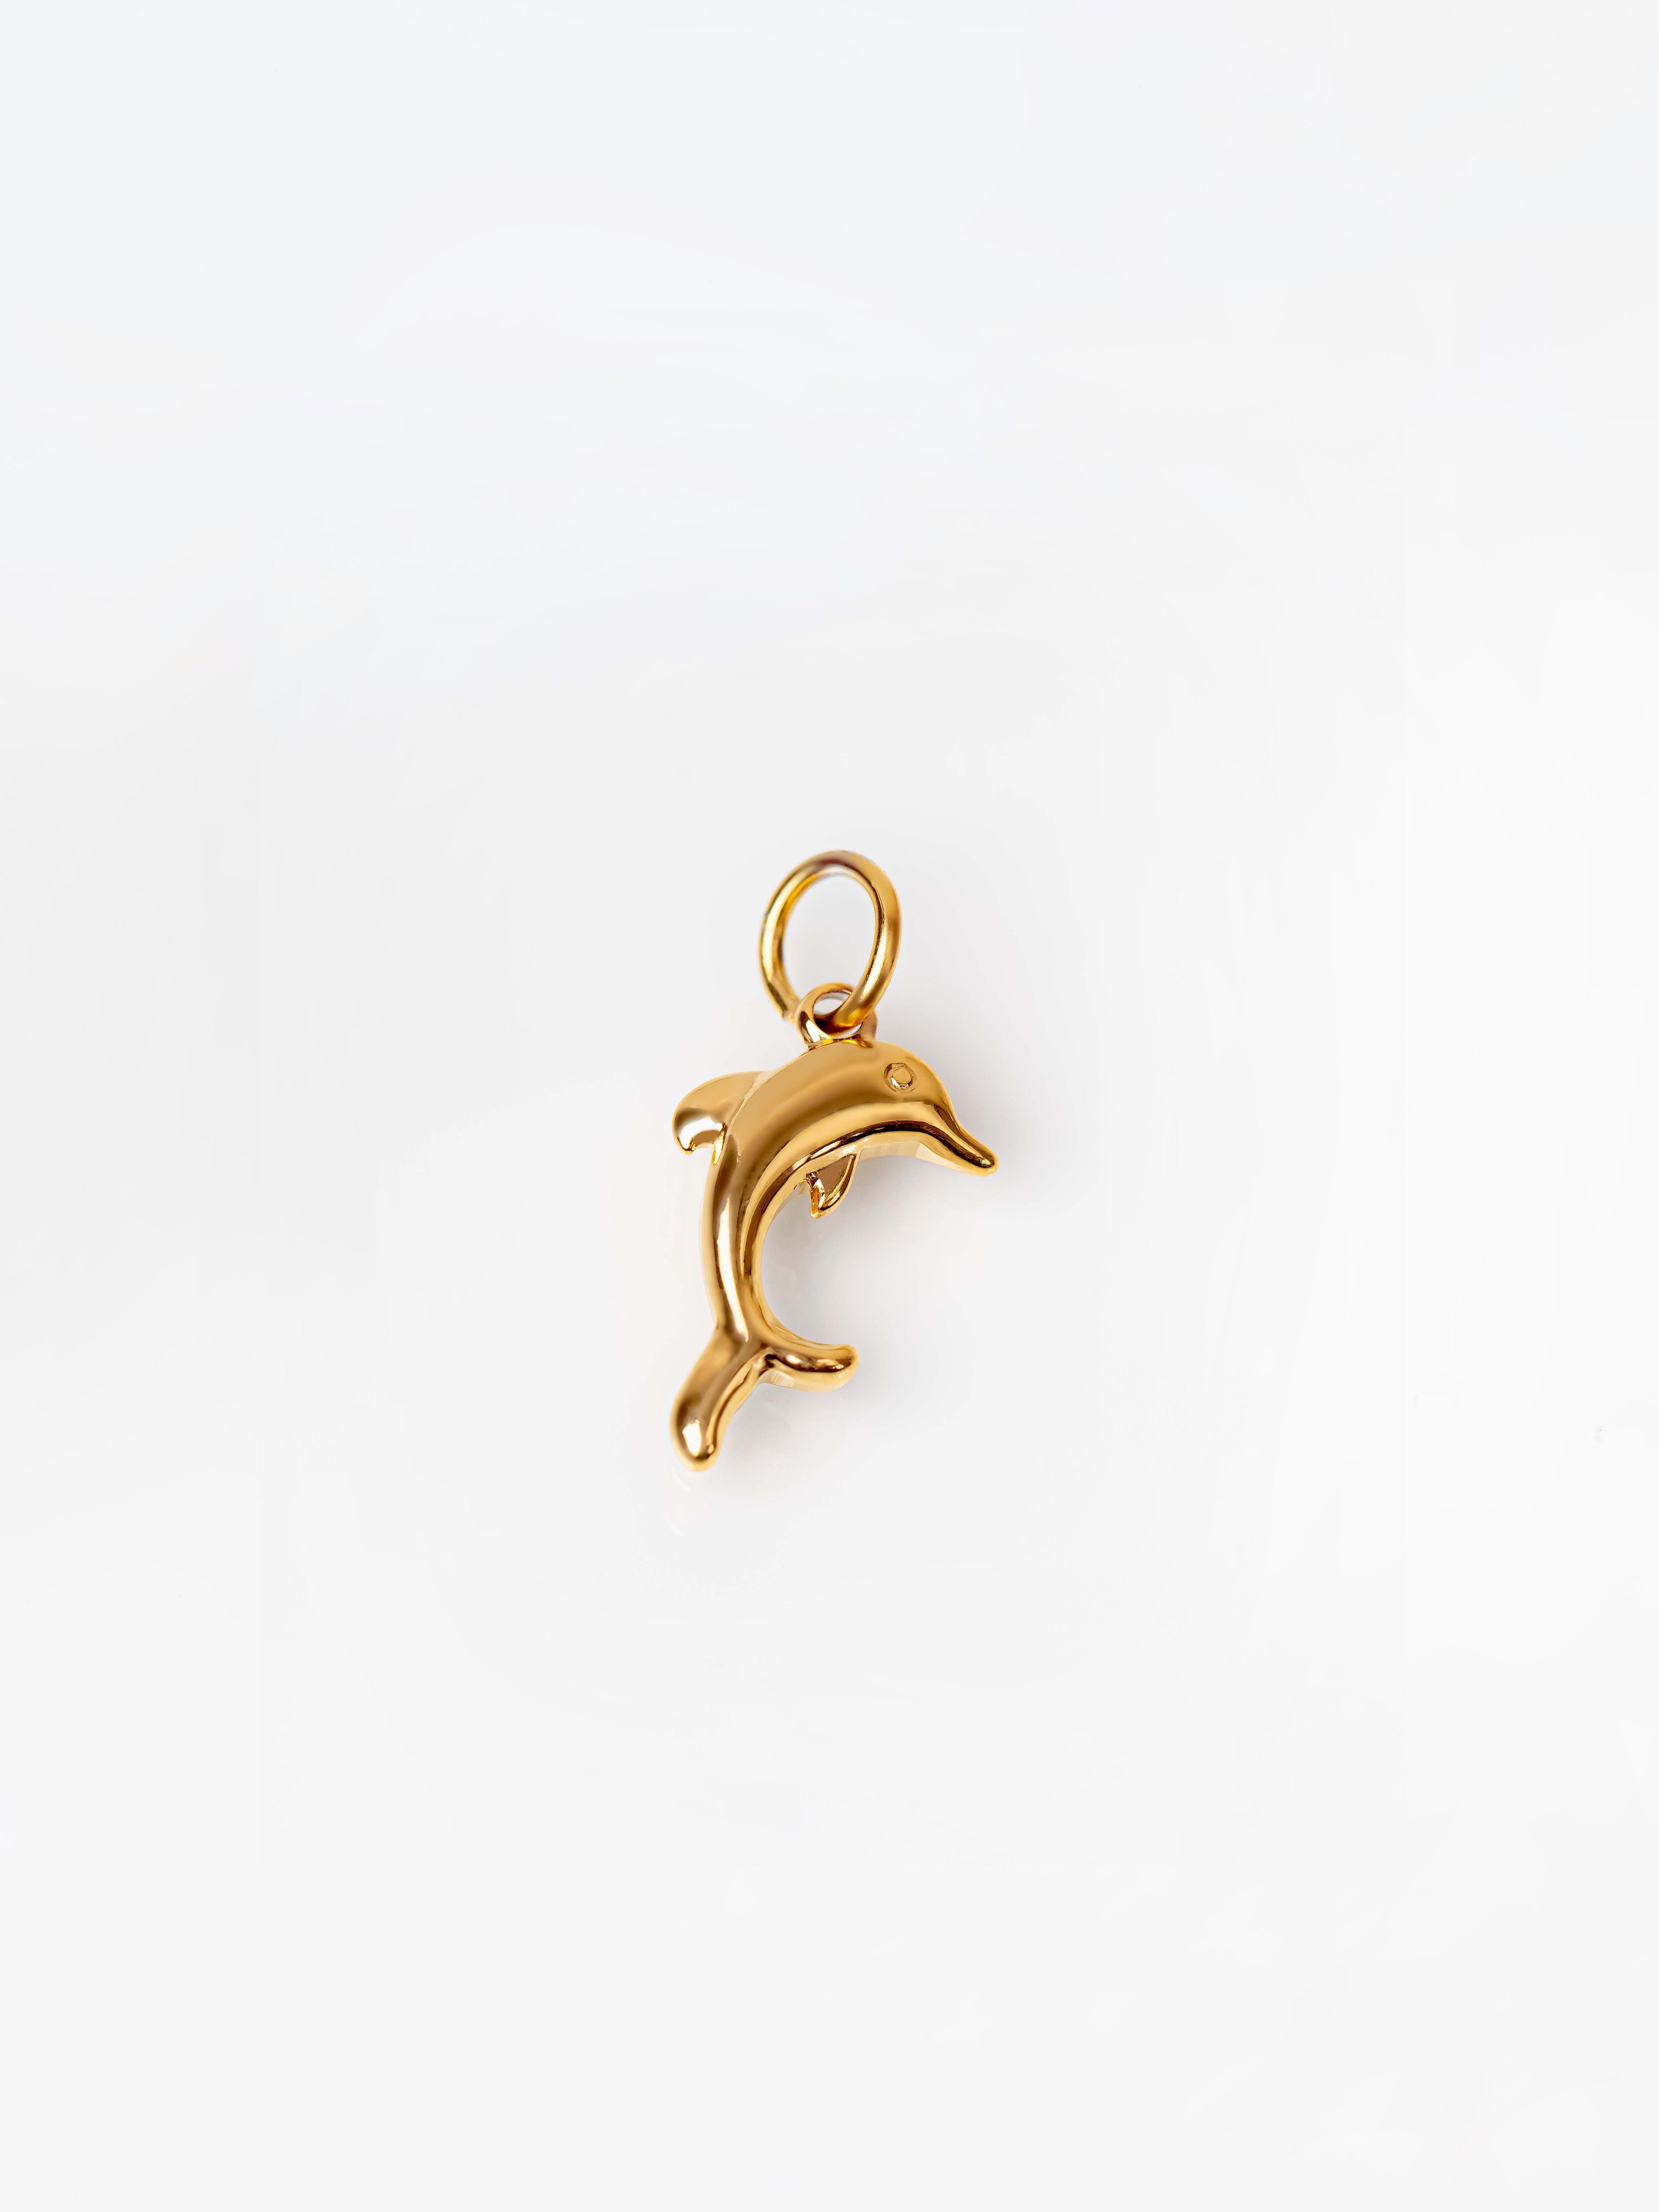 Gold Tiny Dolphin Pendant / Charm